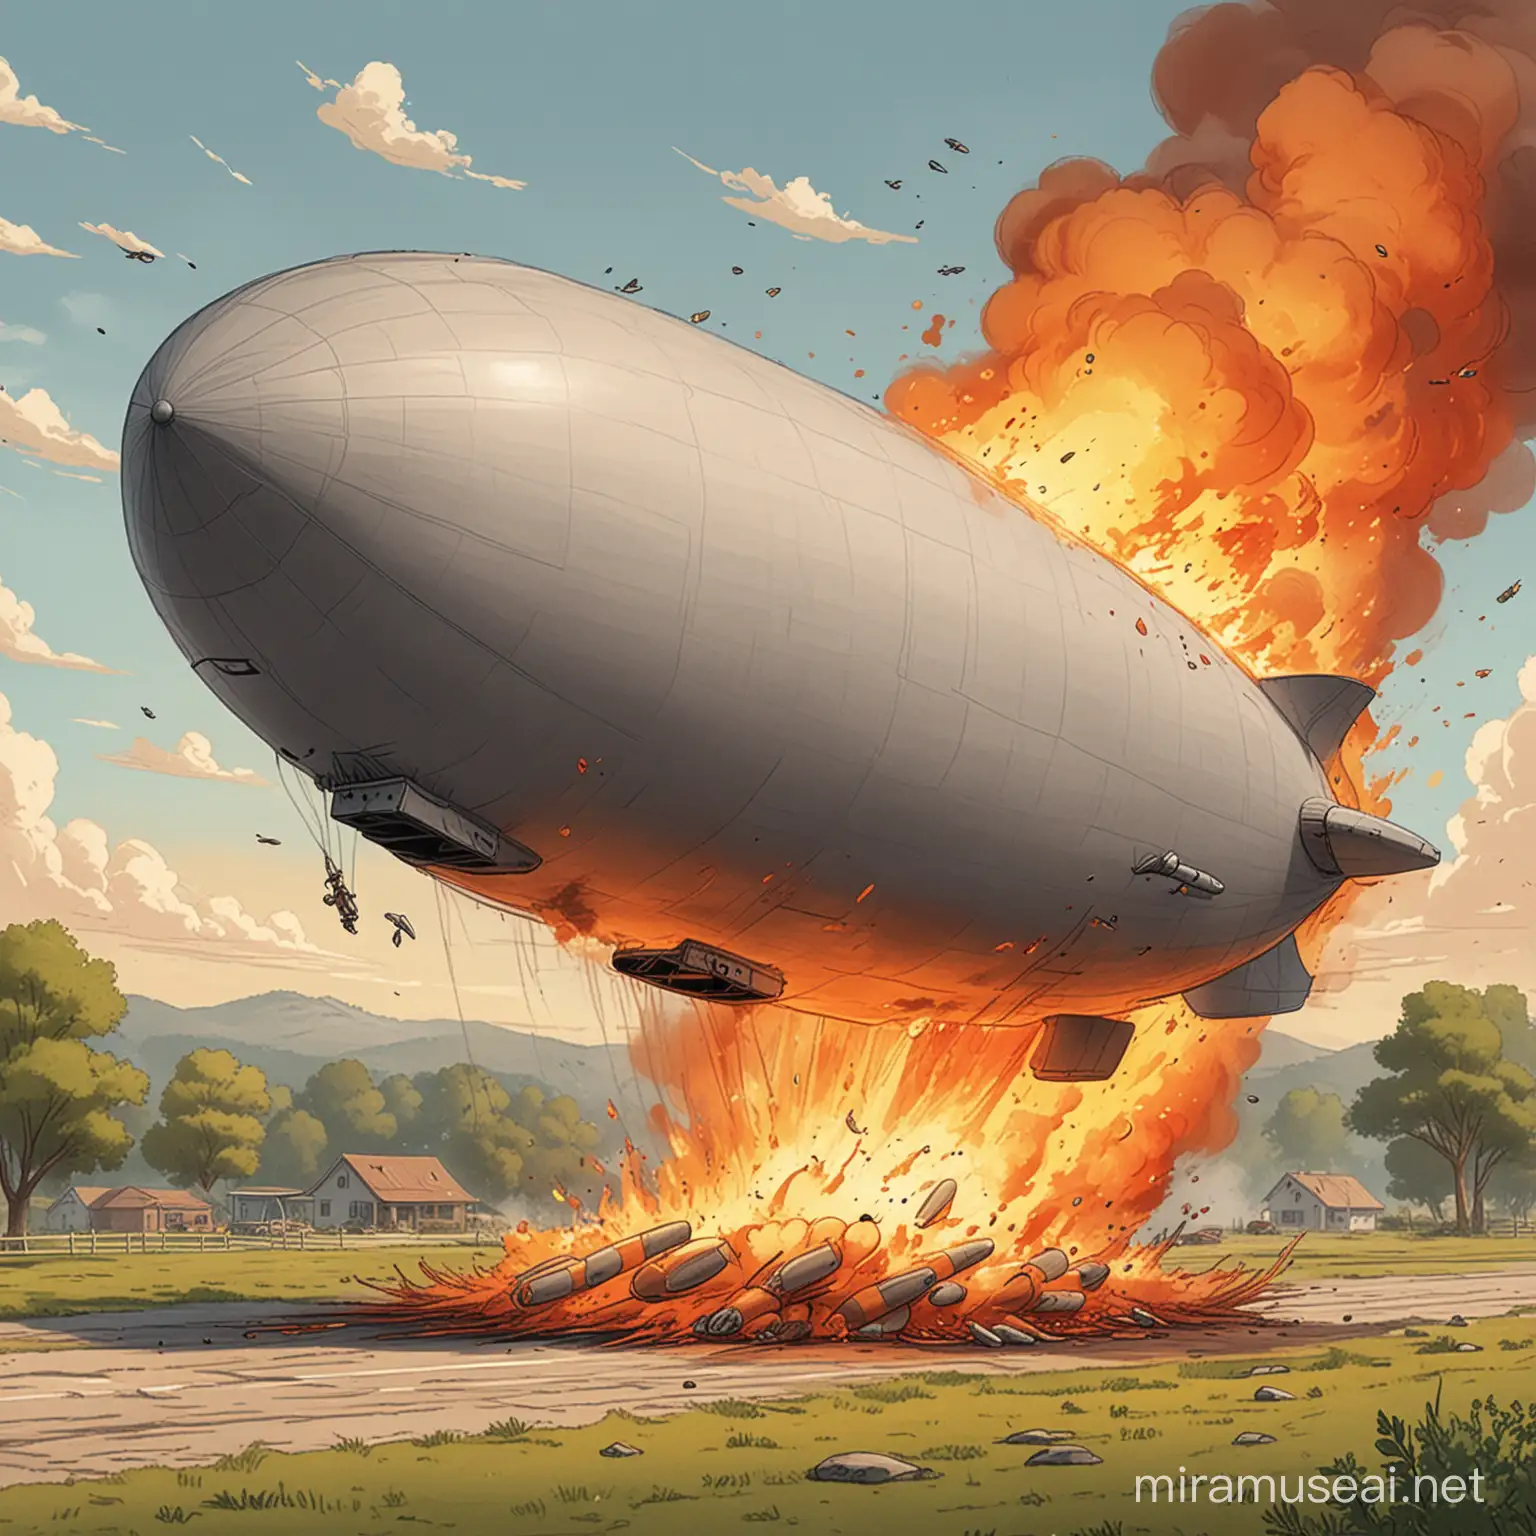 Cartoon Air Blimp Crash Disaster in the Sky